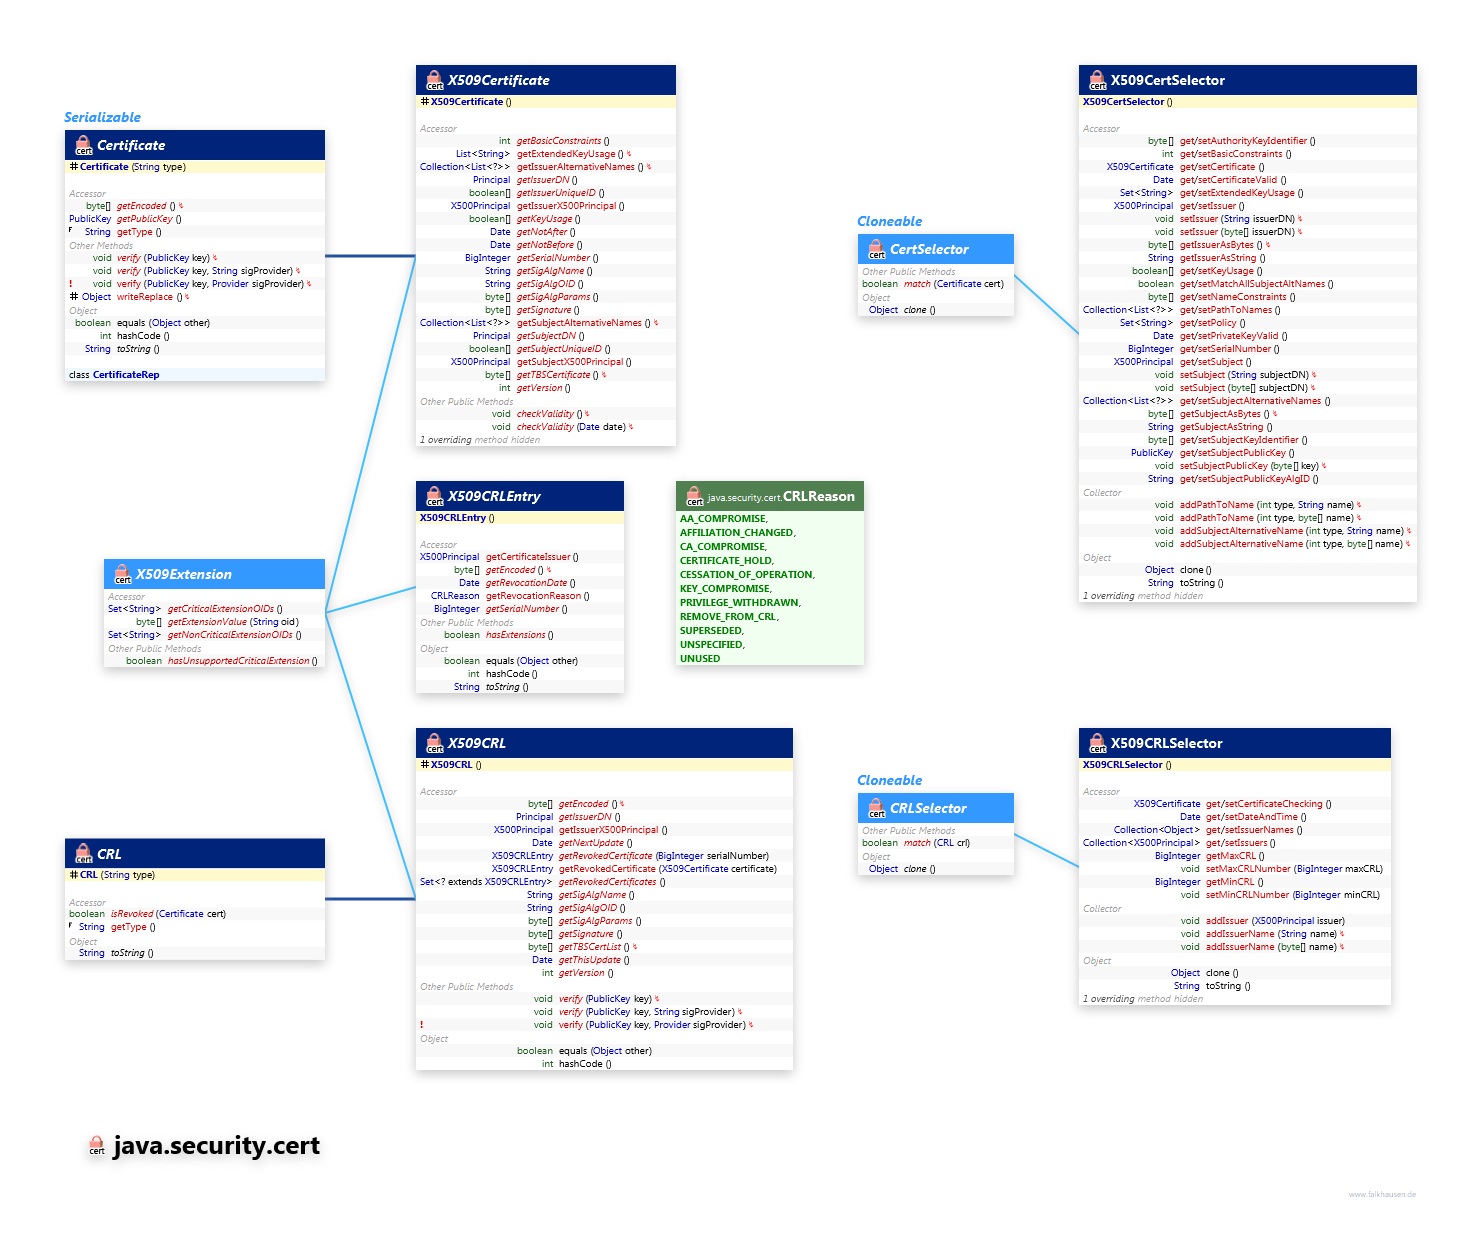 java.security.cert Certificate class diagram and api documentation for Java 8